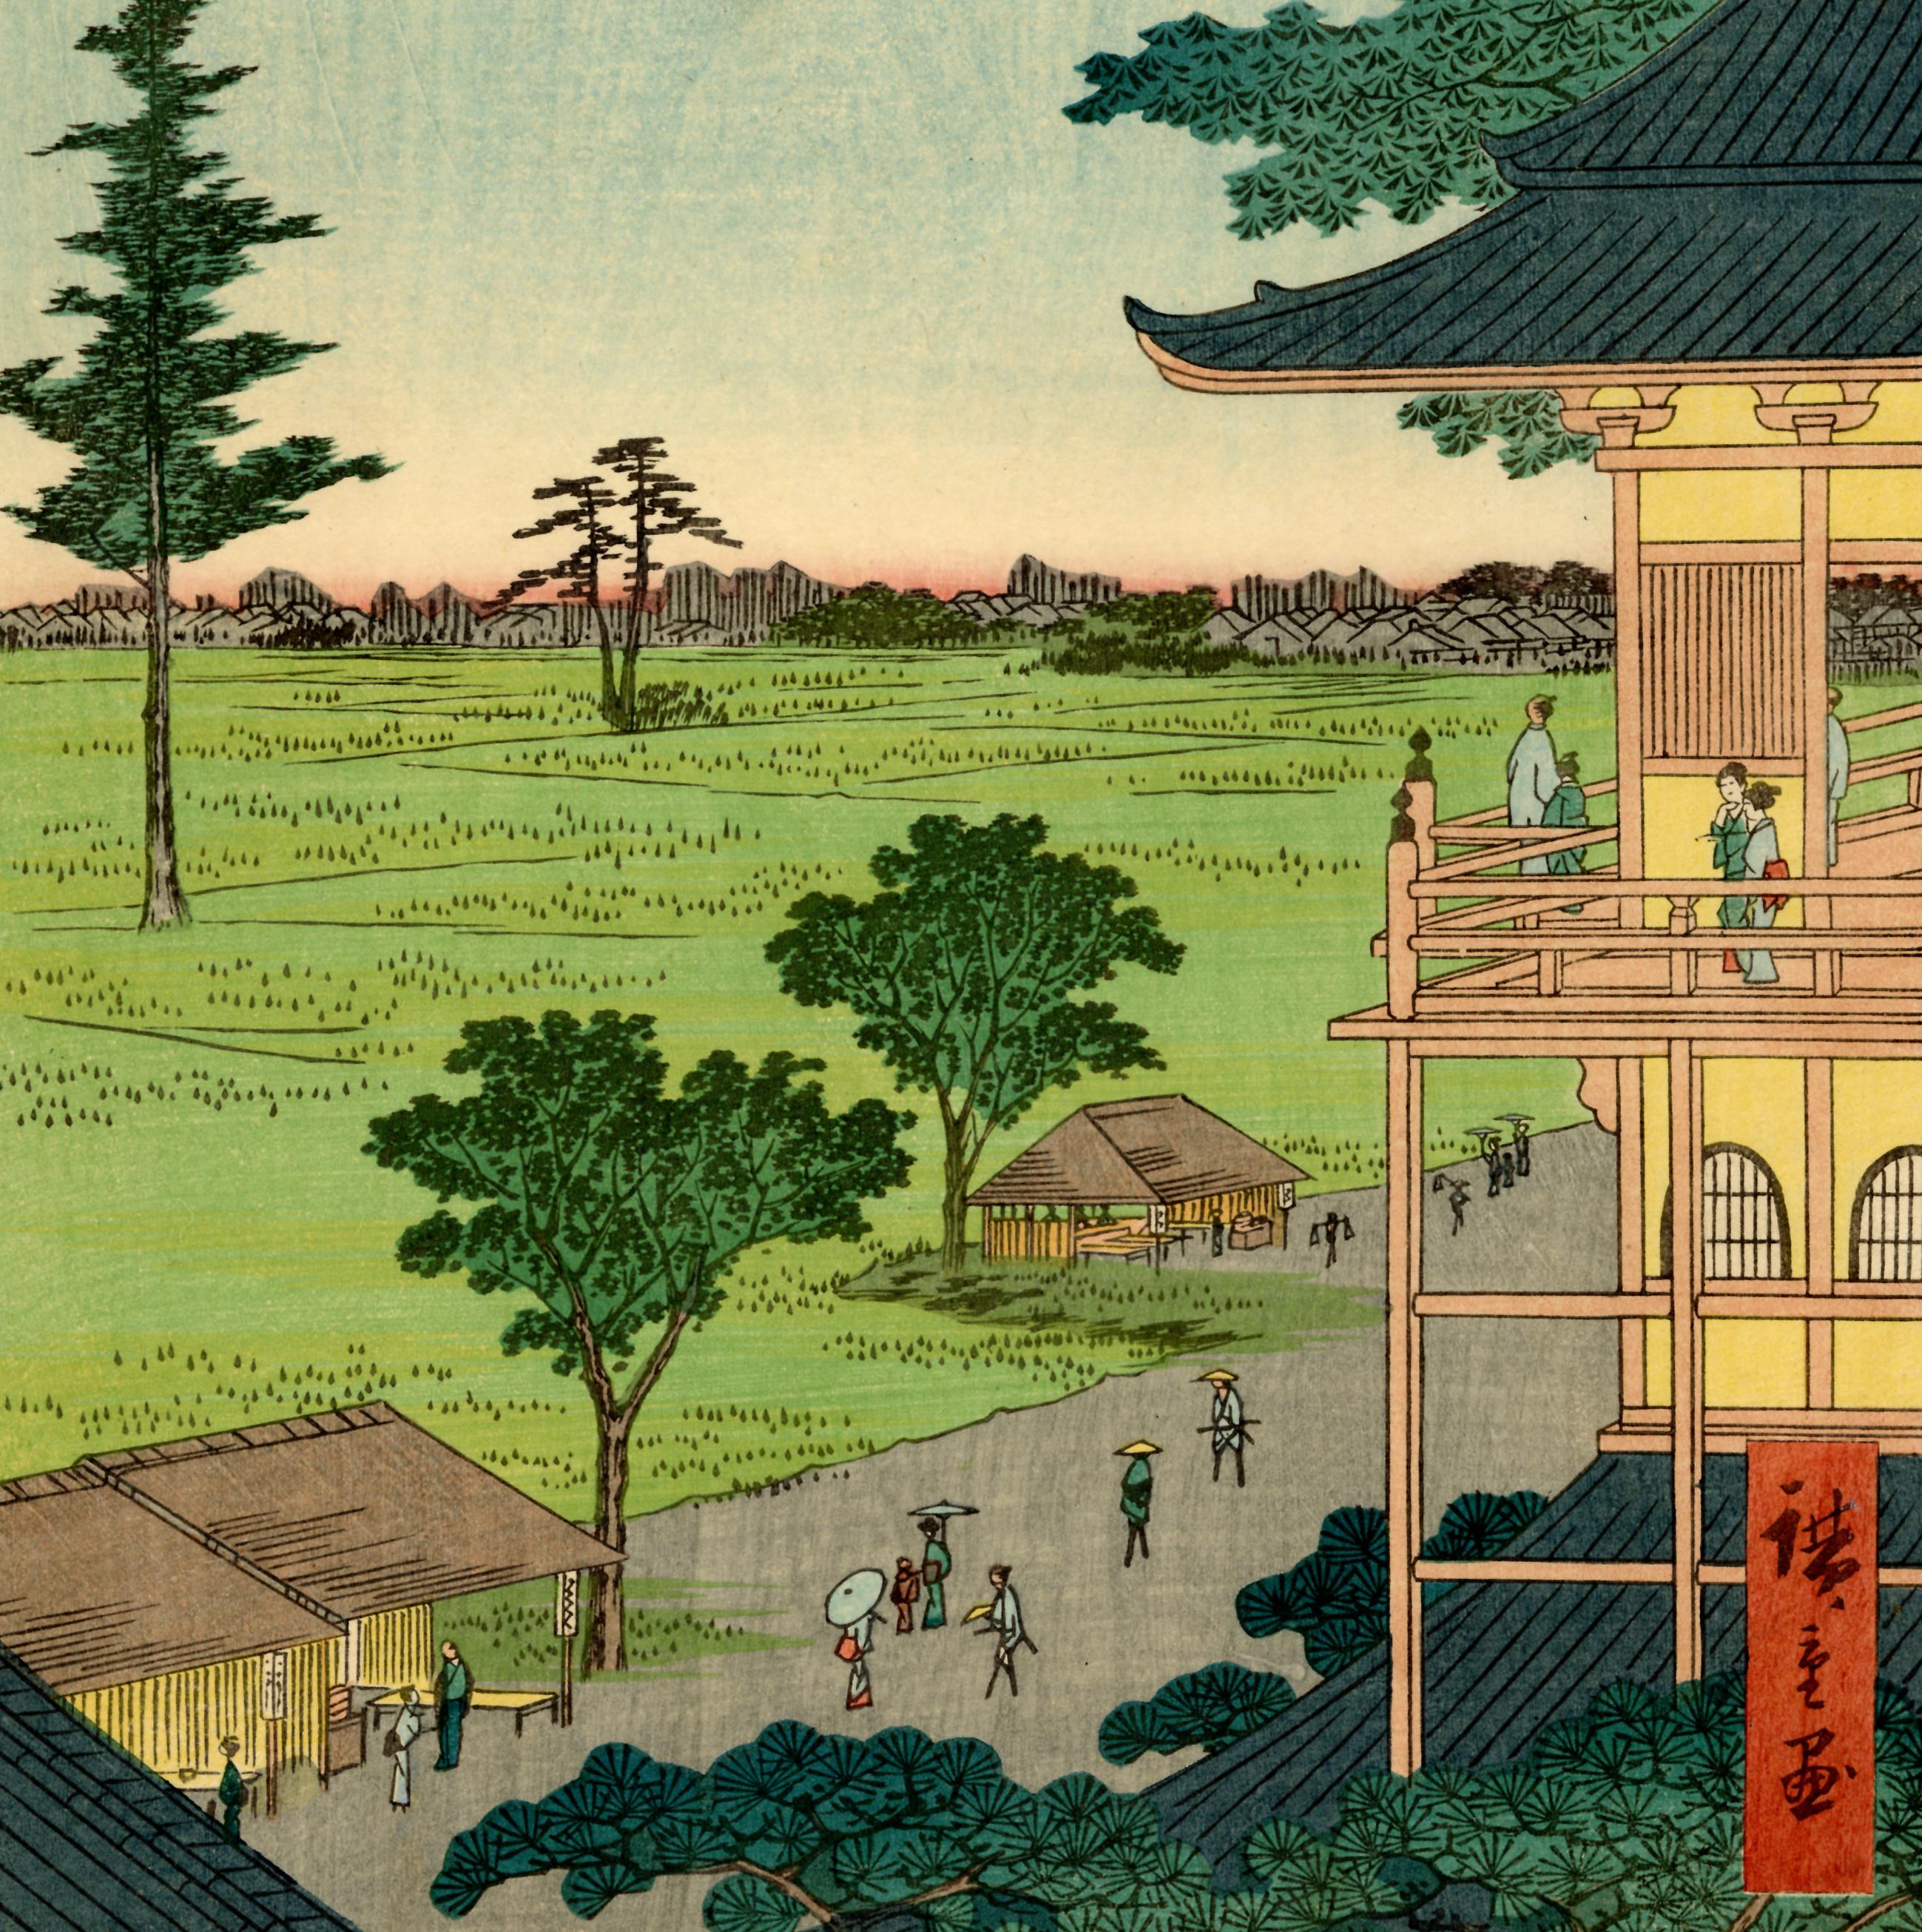 Spiral Hall, Five Hundred Rakan Temple from 100 Famous Views of Edo - Print by Utagawa Hiroshige (Ando Hiroshige)